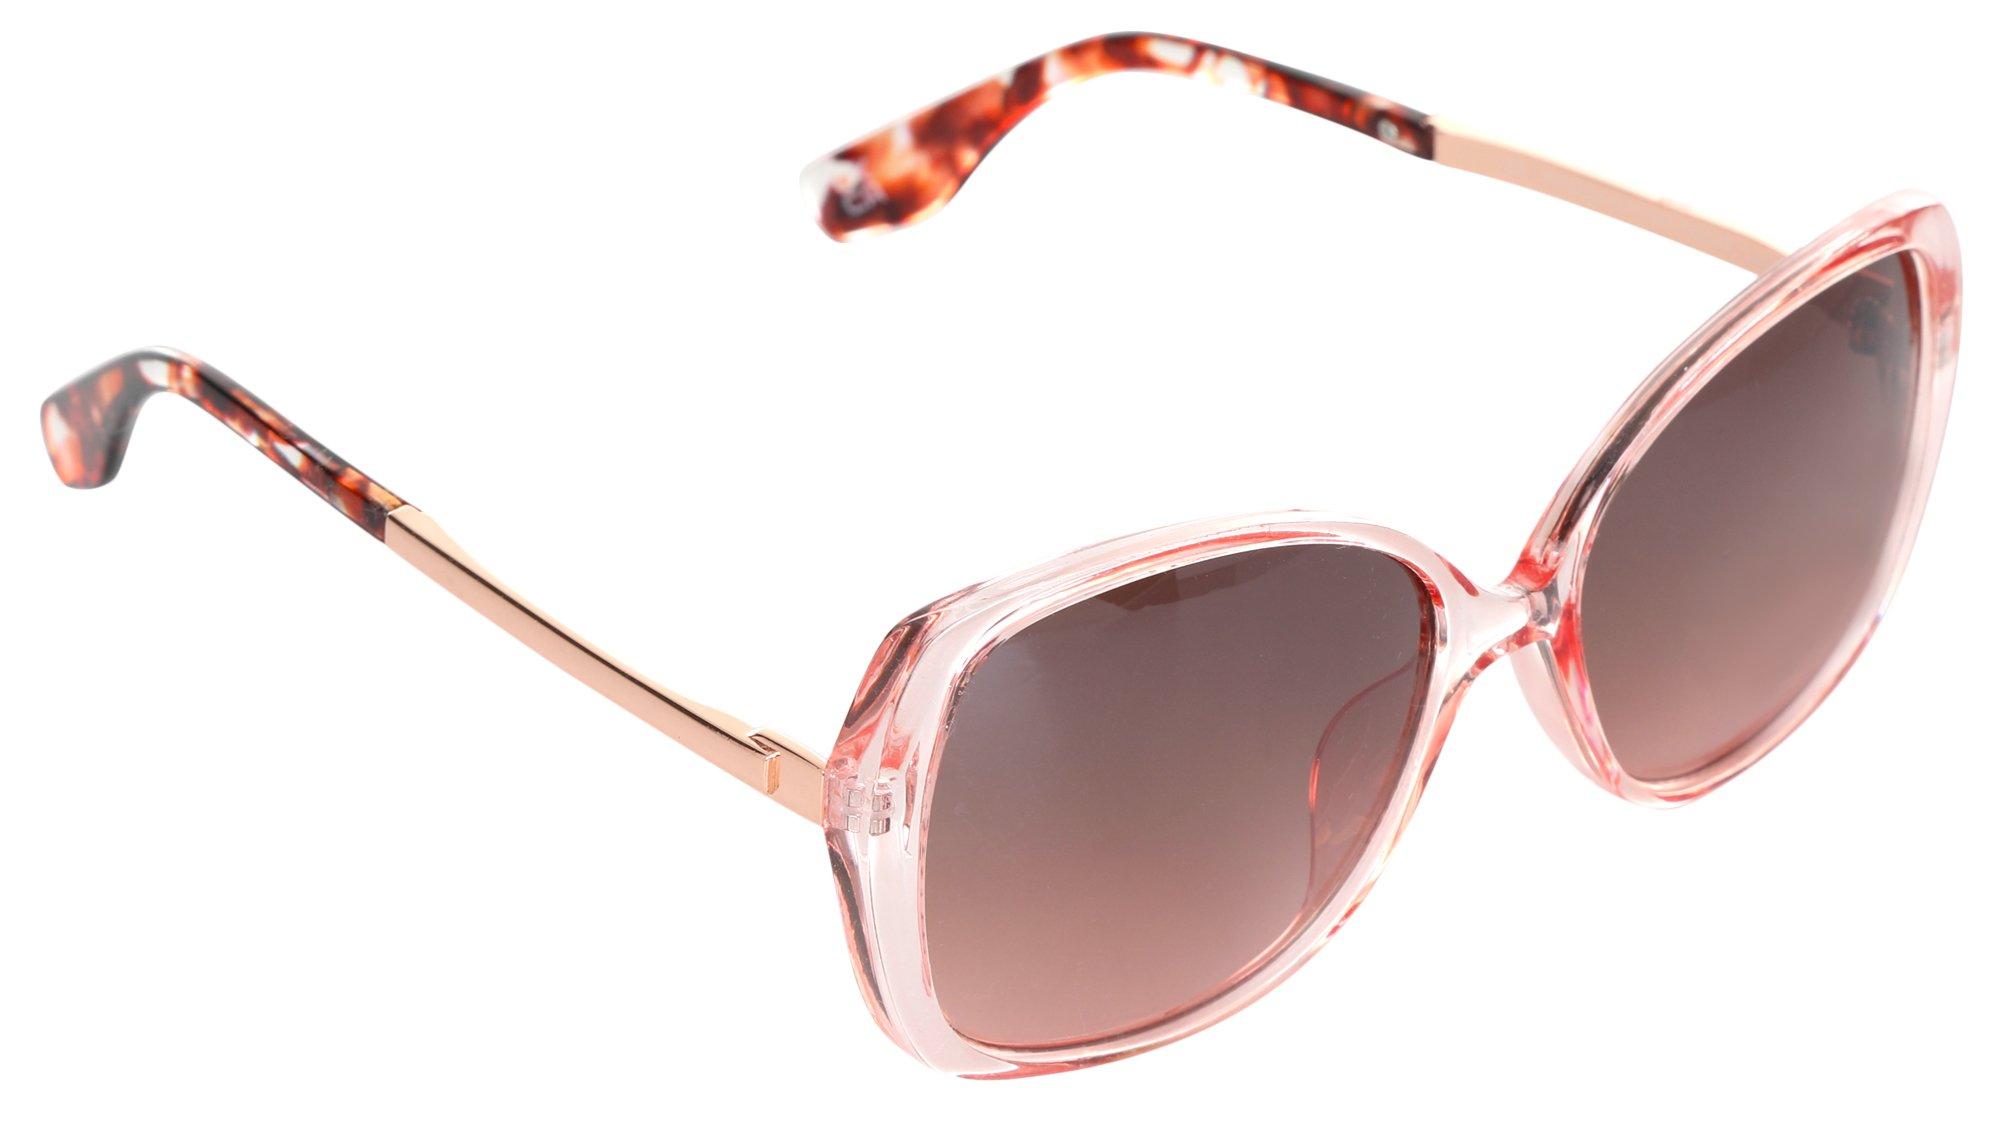 Women's Butterfly Frame Sunglasses